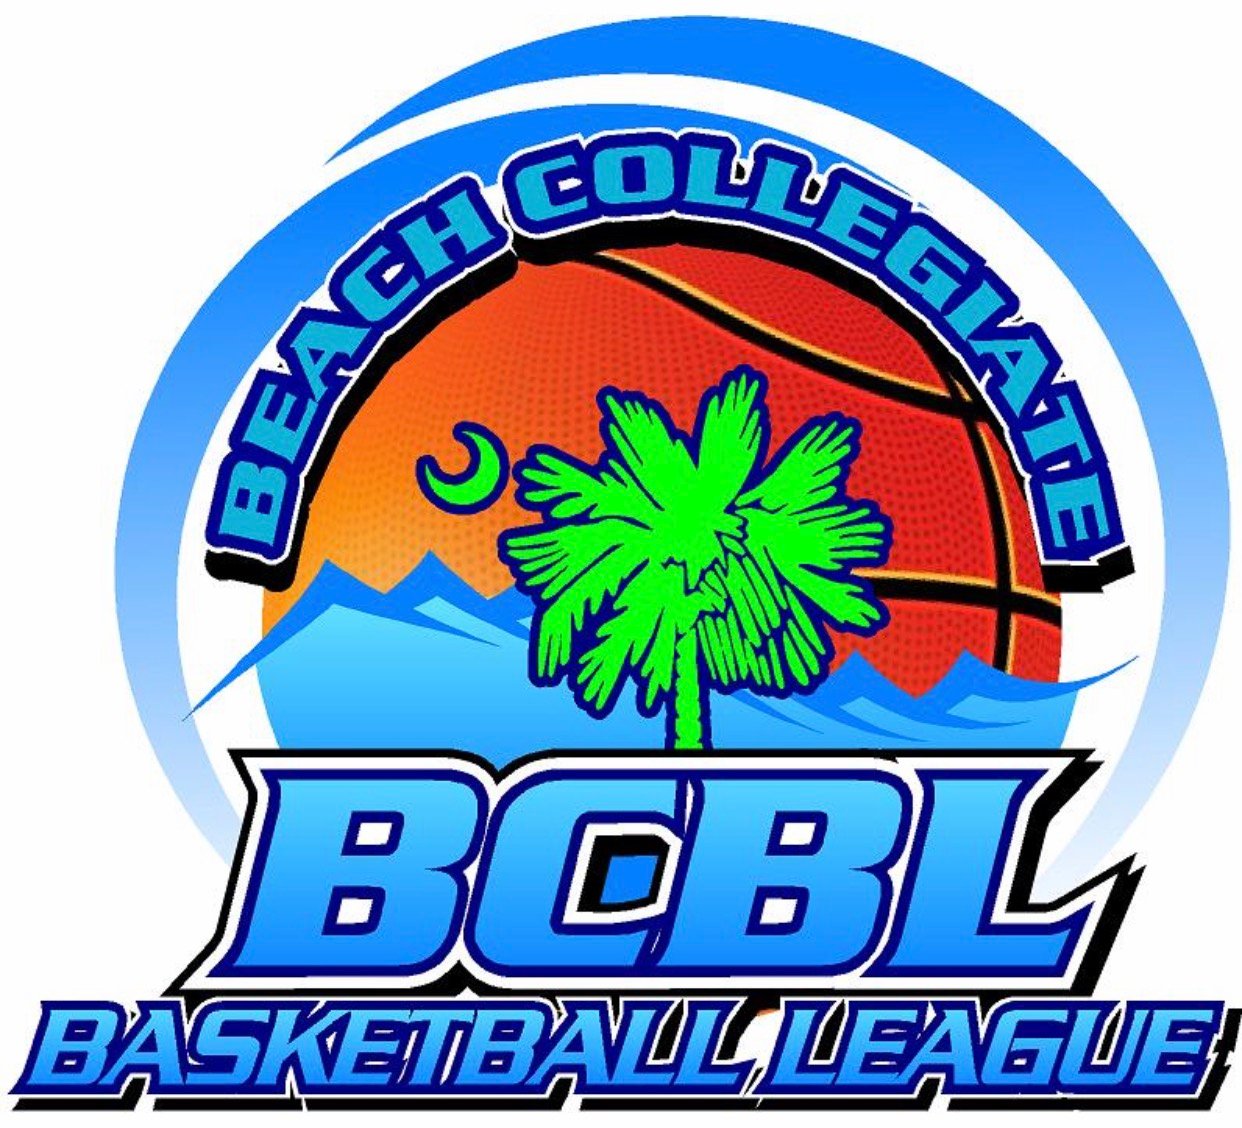 Beach Collegiate Basketball League (BCBL) begins in July of 2018 in beautiful Myrtle Beach! The BCBL provides a phenomenal collegiate summer league experience!